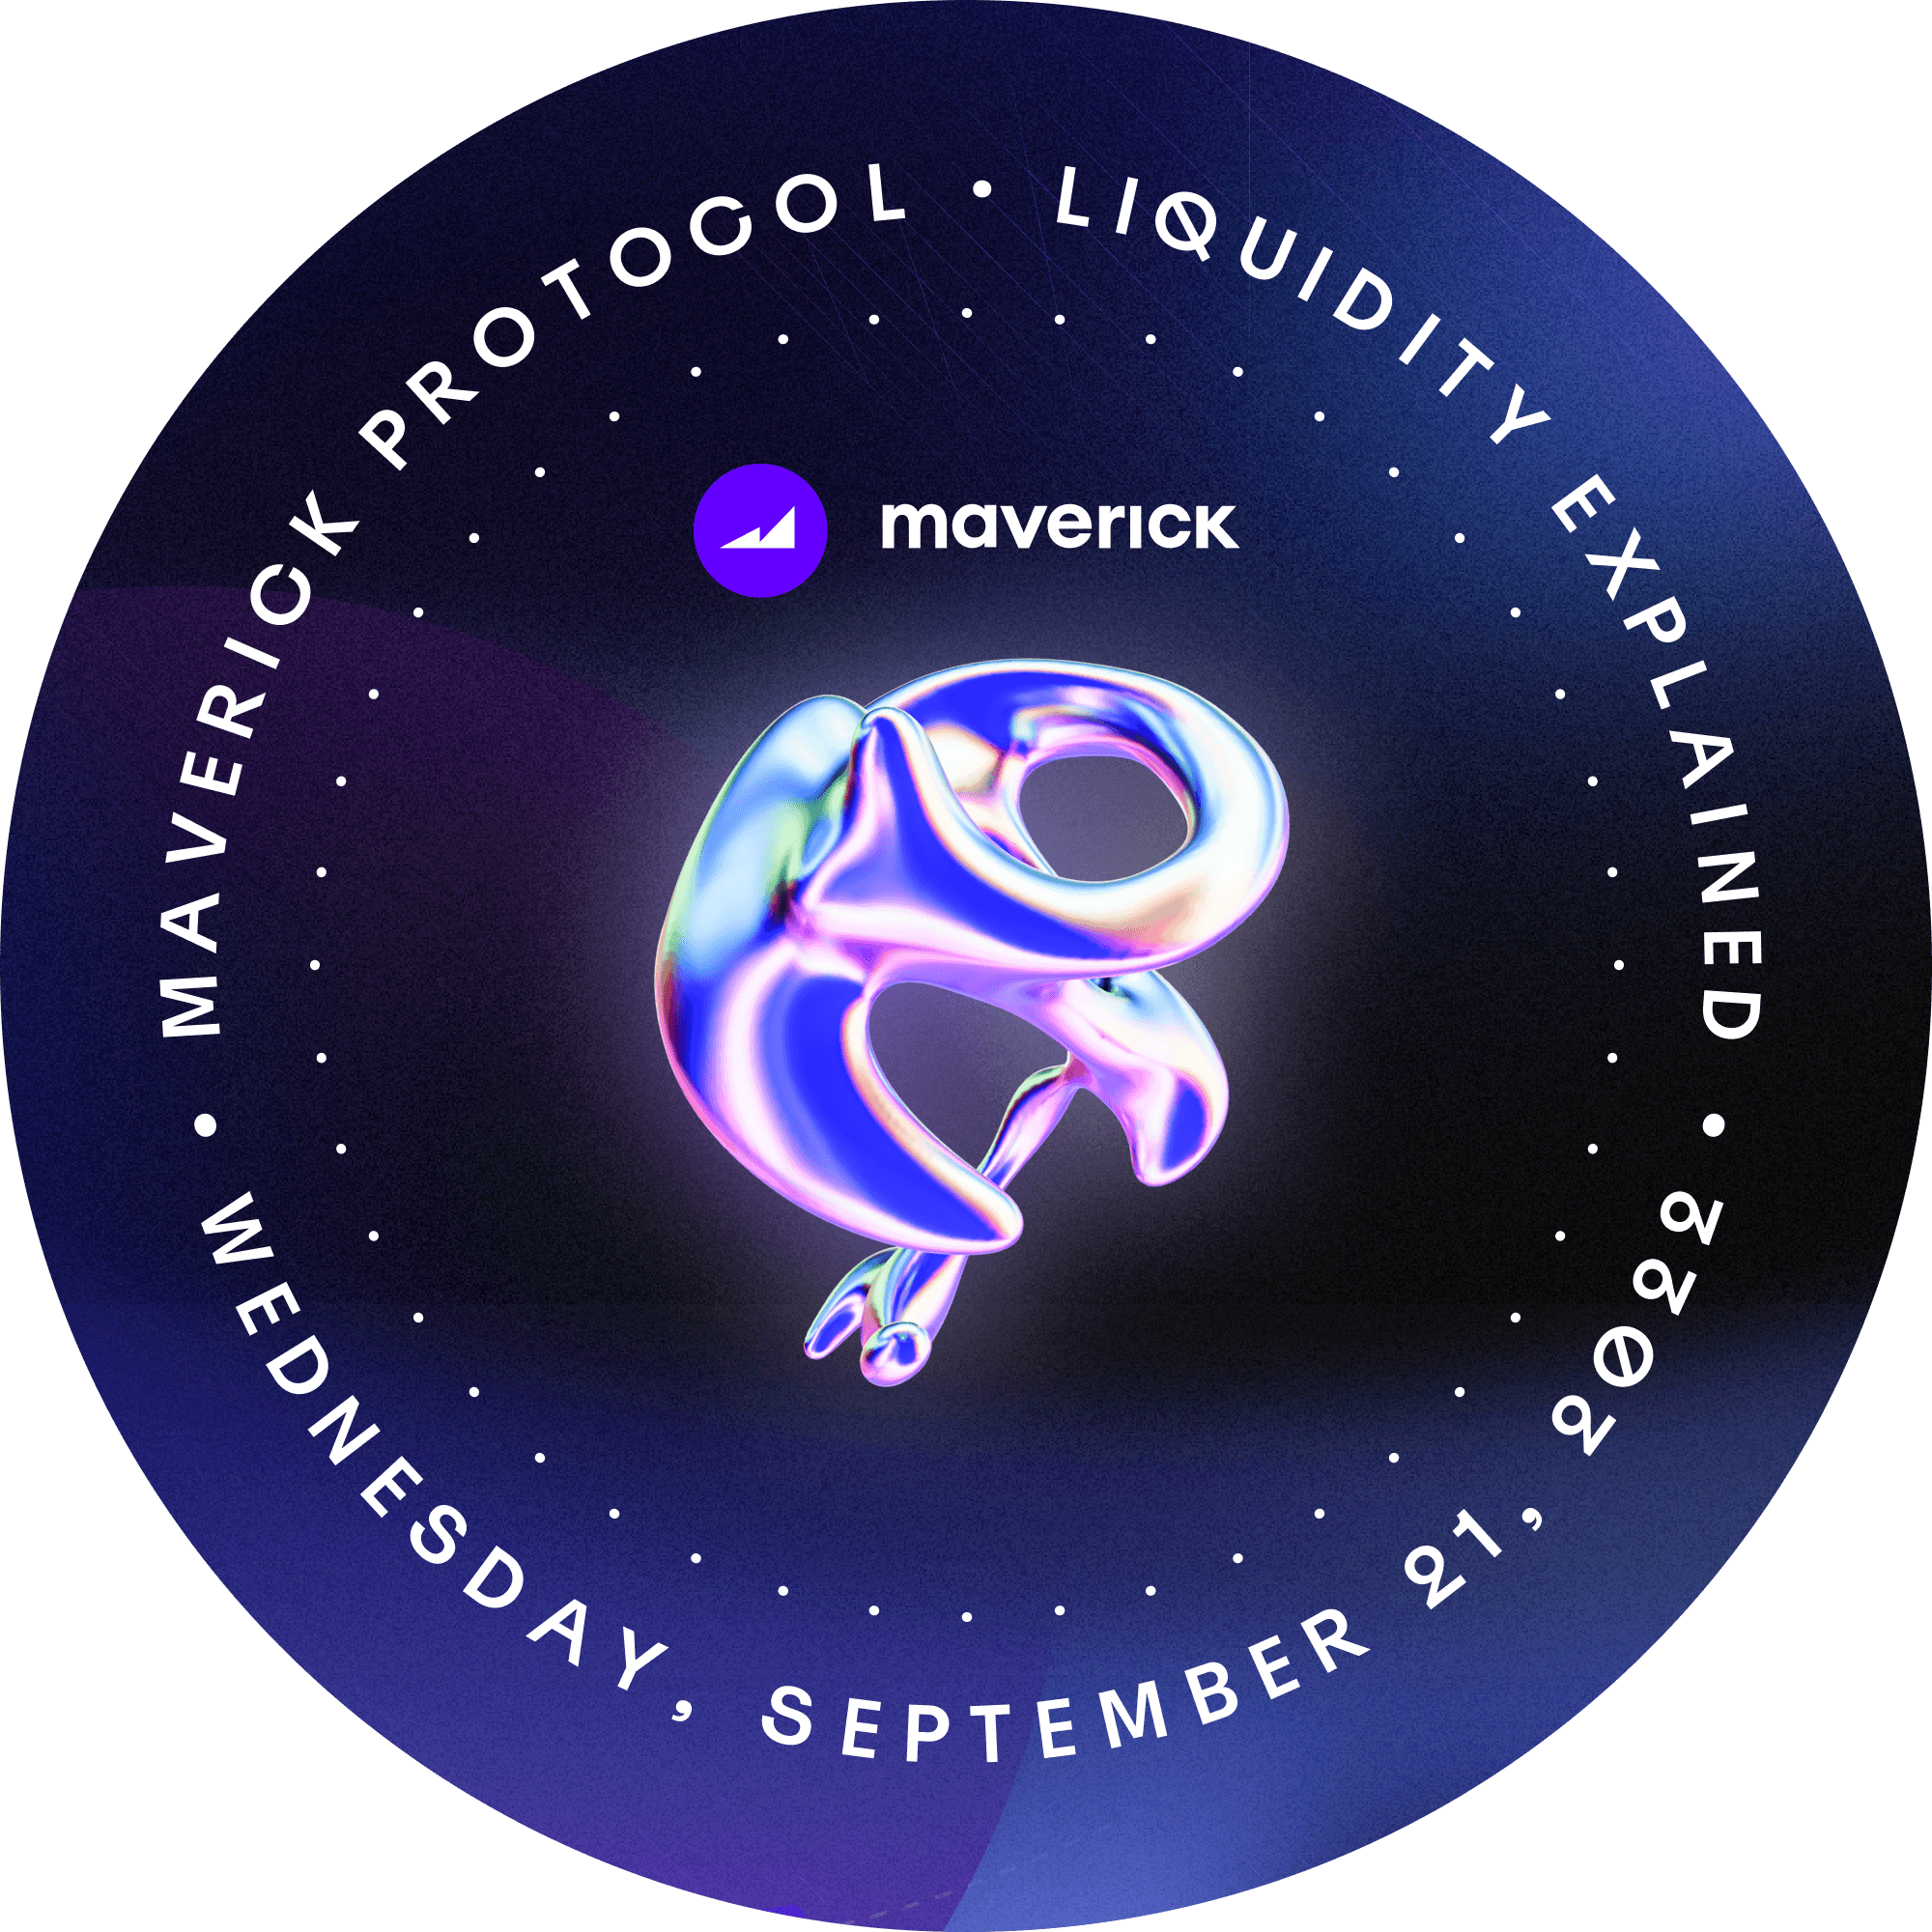 Maverick Twitter Space EP4: Liquidity Explained